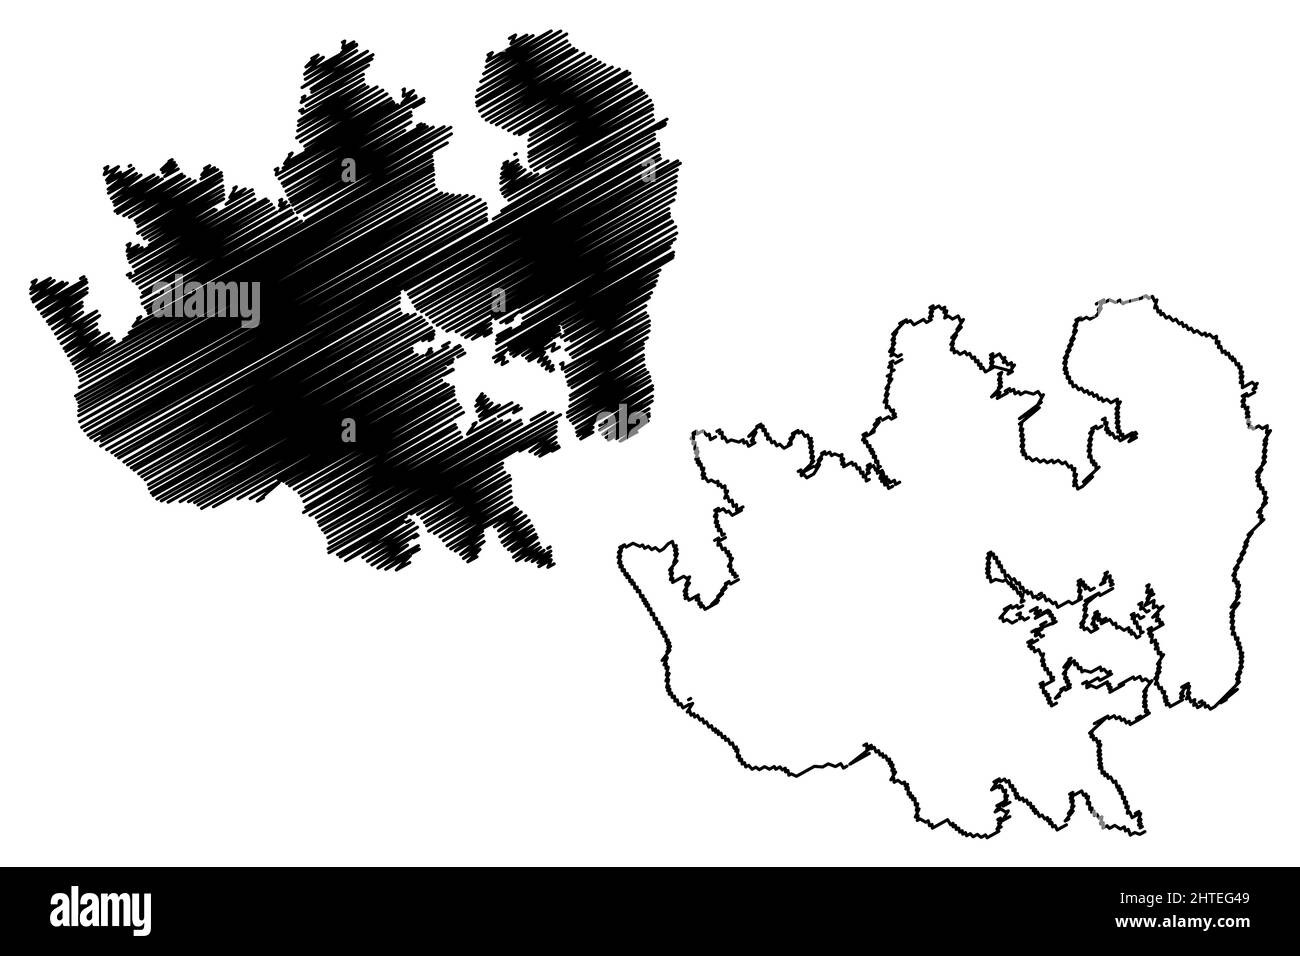 Batam island (Republic of Indonesia, South East Asia) map vector illustration, scribble sketch Batam map Stock Vector